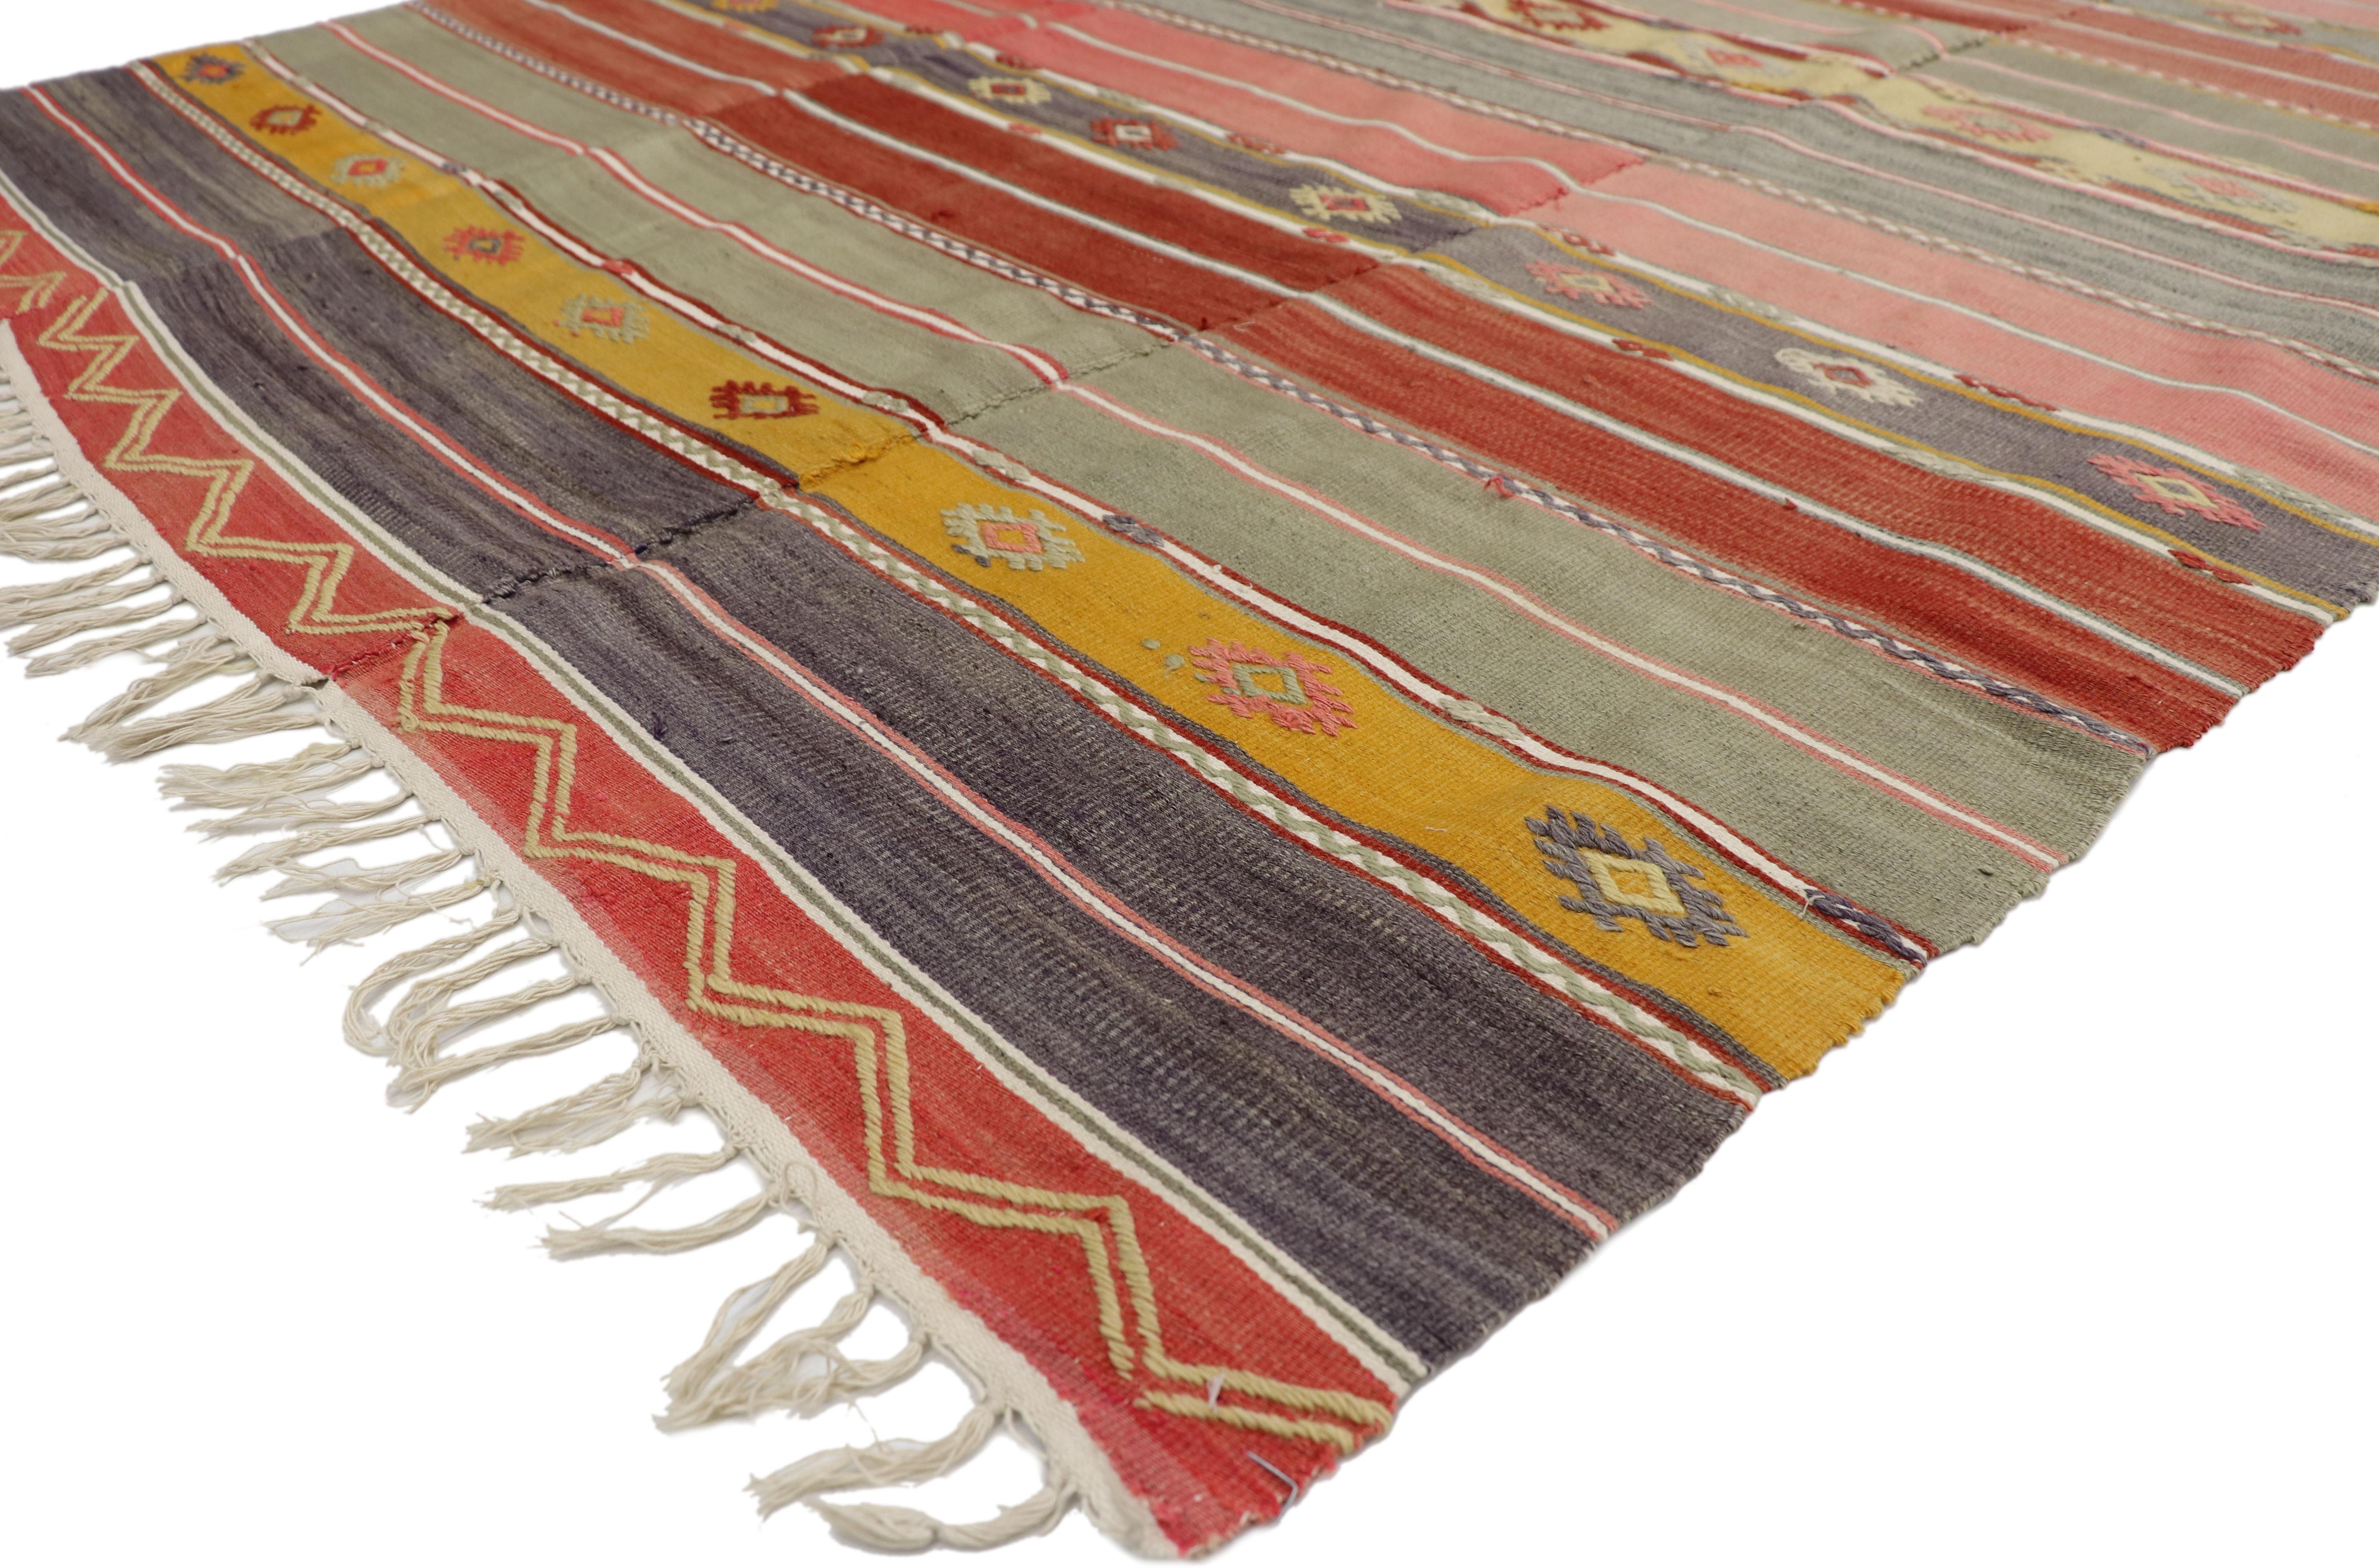 Hand-Woven Boho Chic Vintage Turkish Kilim Rug, Flat-Weave Rug with Tribal Style